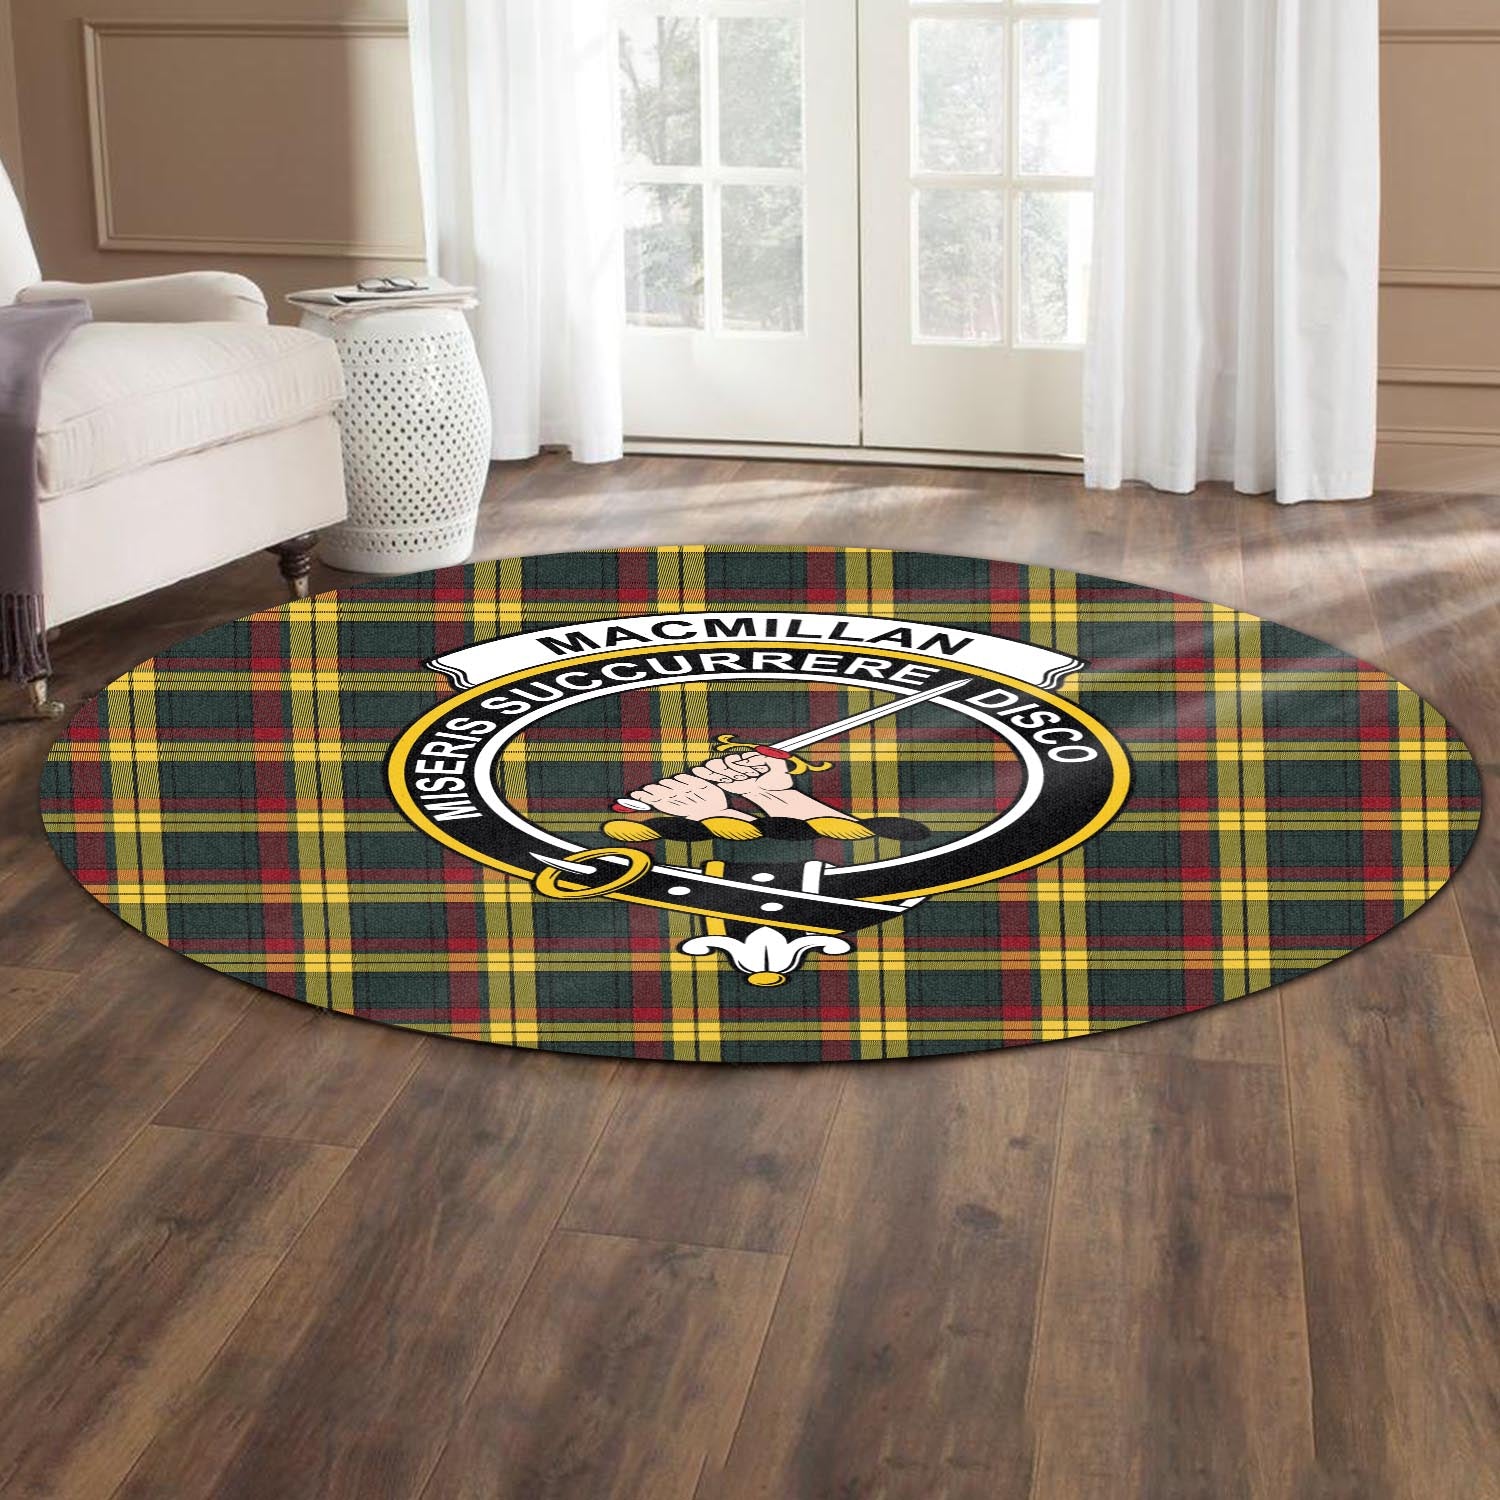 macmillan-old-modern-tartan-round-rug-with-family-crest